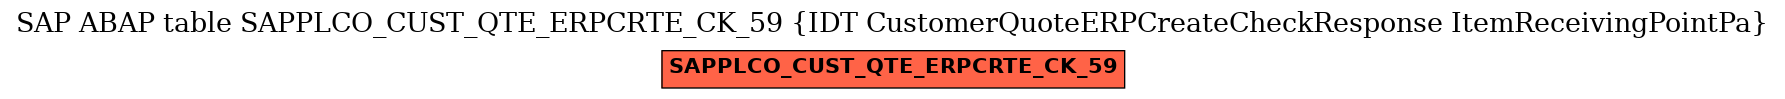 E-R Diagram for table SAPPLCO_CUST_QTE_ERPCRTE_CK_59 (IDT CustomerQuoteERPCreateCheckResponse ItemReceivingPointPa)